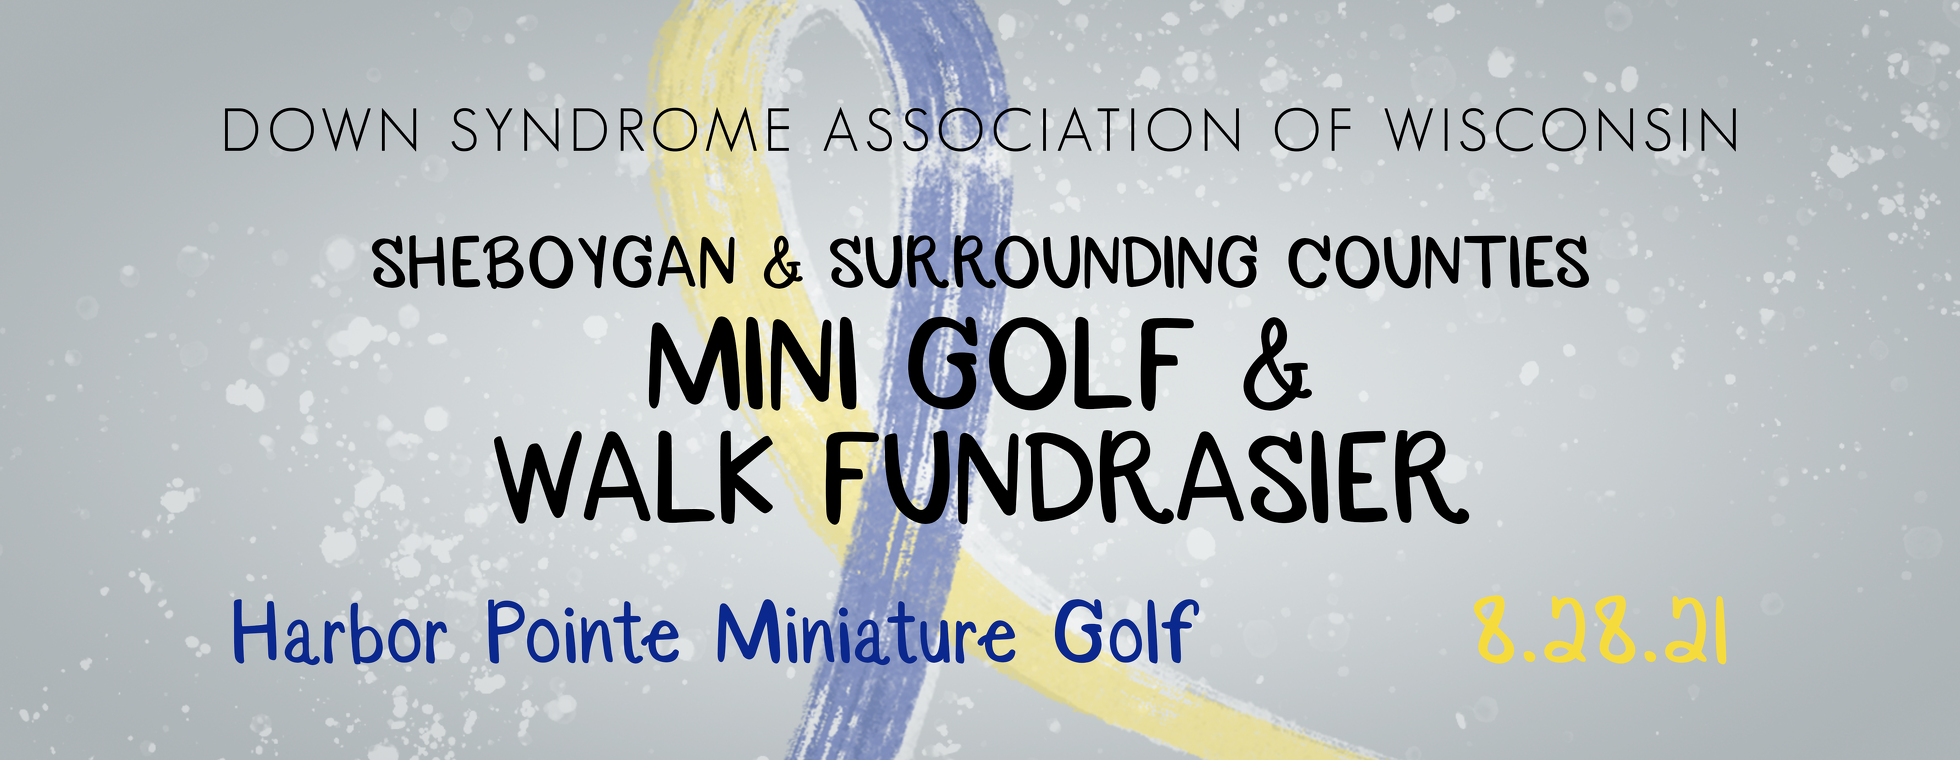 DSAW- Sheboygan Mini Golf & Walk Fundraiser